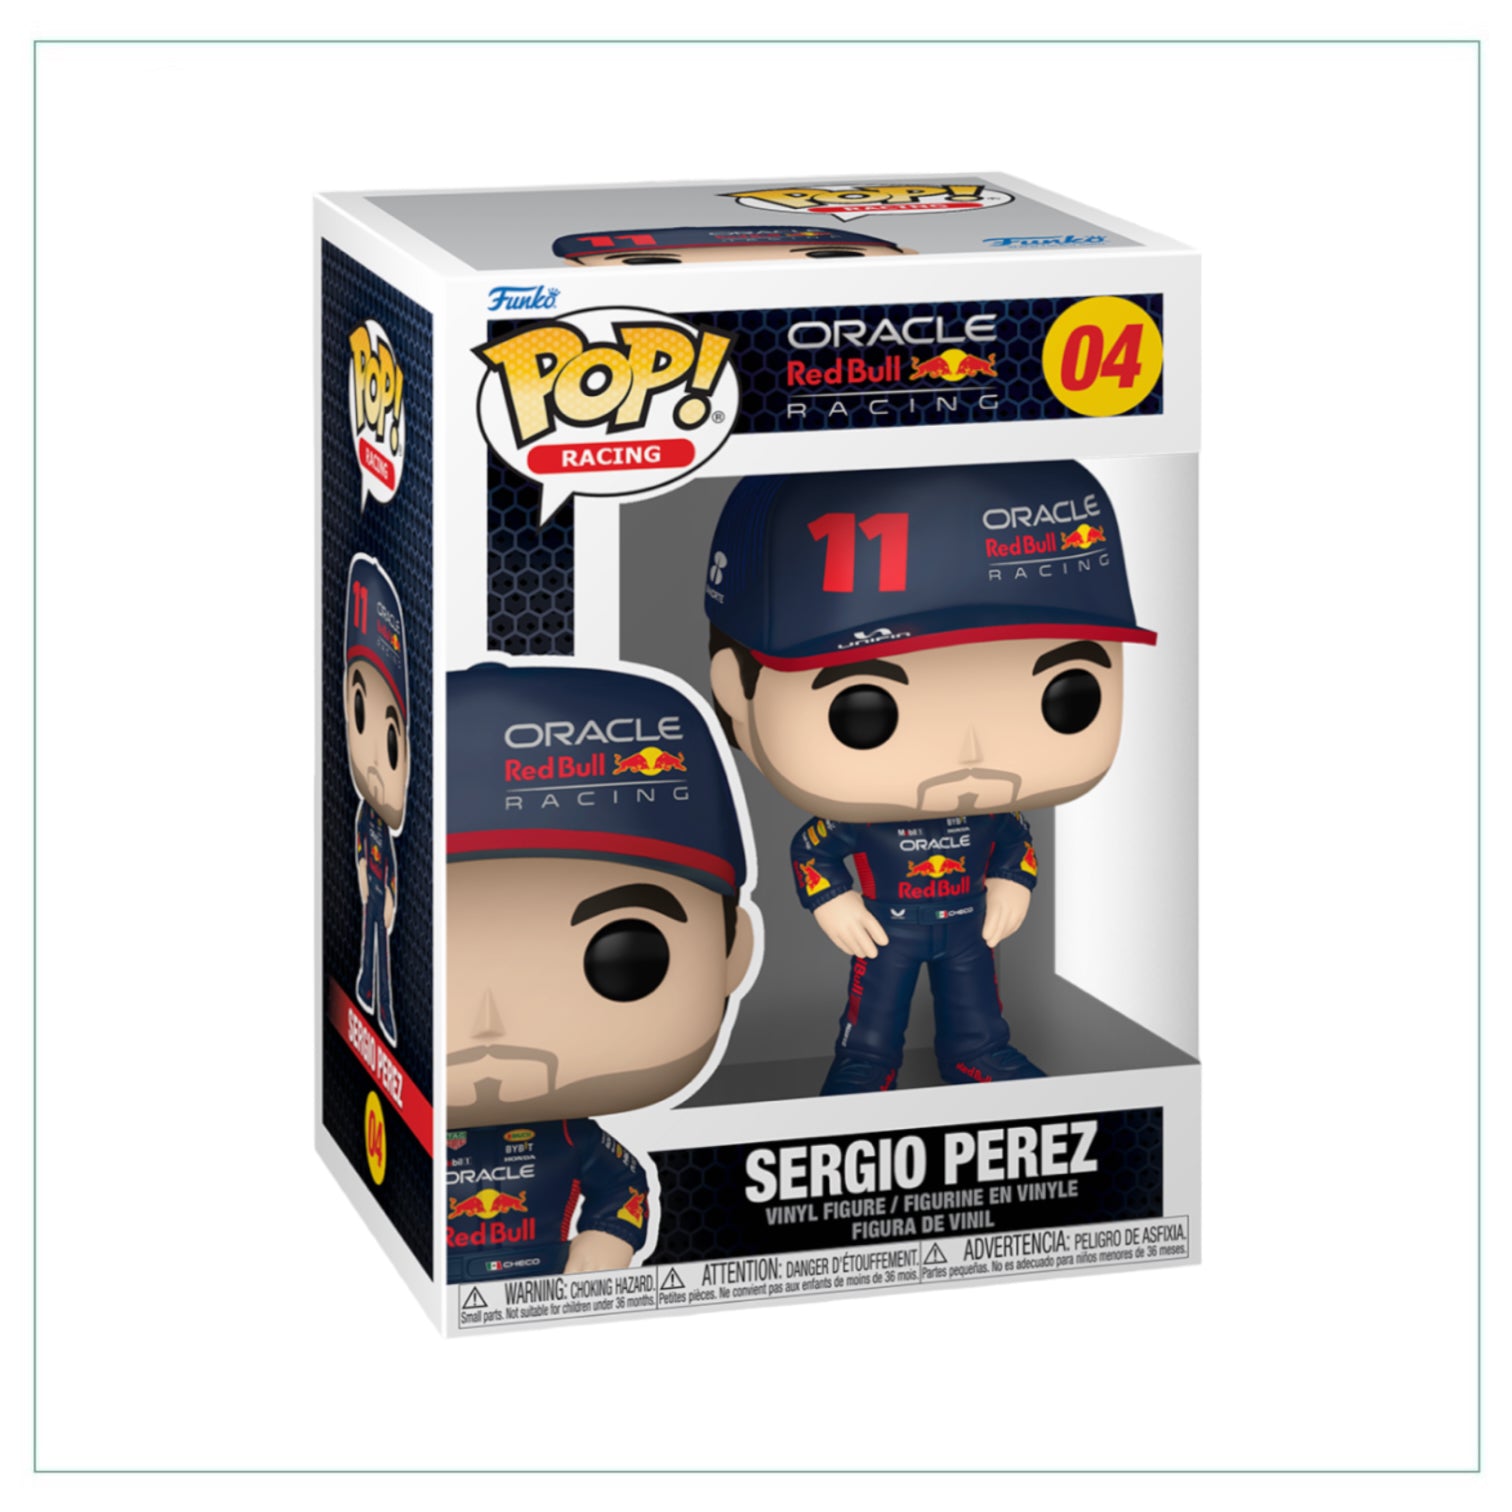 Sergio Perez #04 Funko Pop! Red Bull Racing